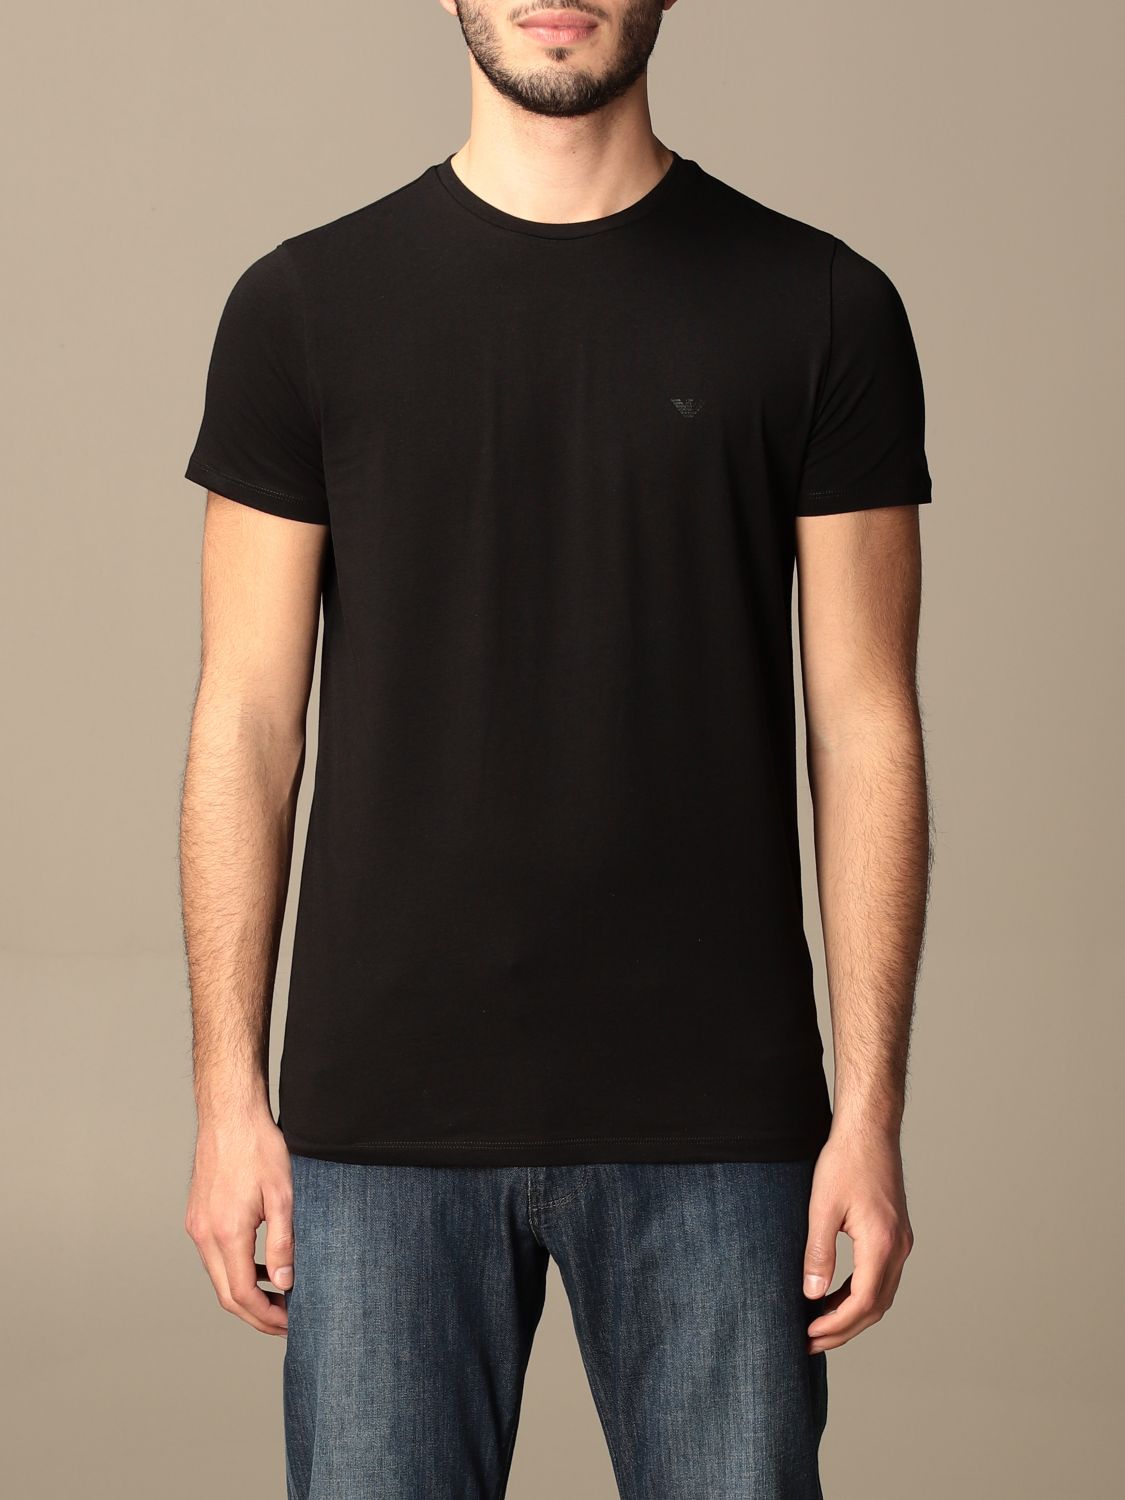 EMPORIO ARMANI: cotton t-shirt with logo - Black | T-Shirt Emporio ...